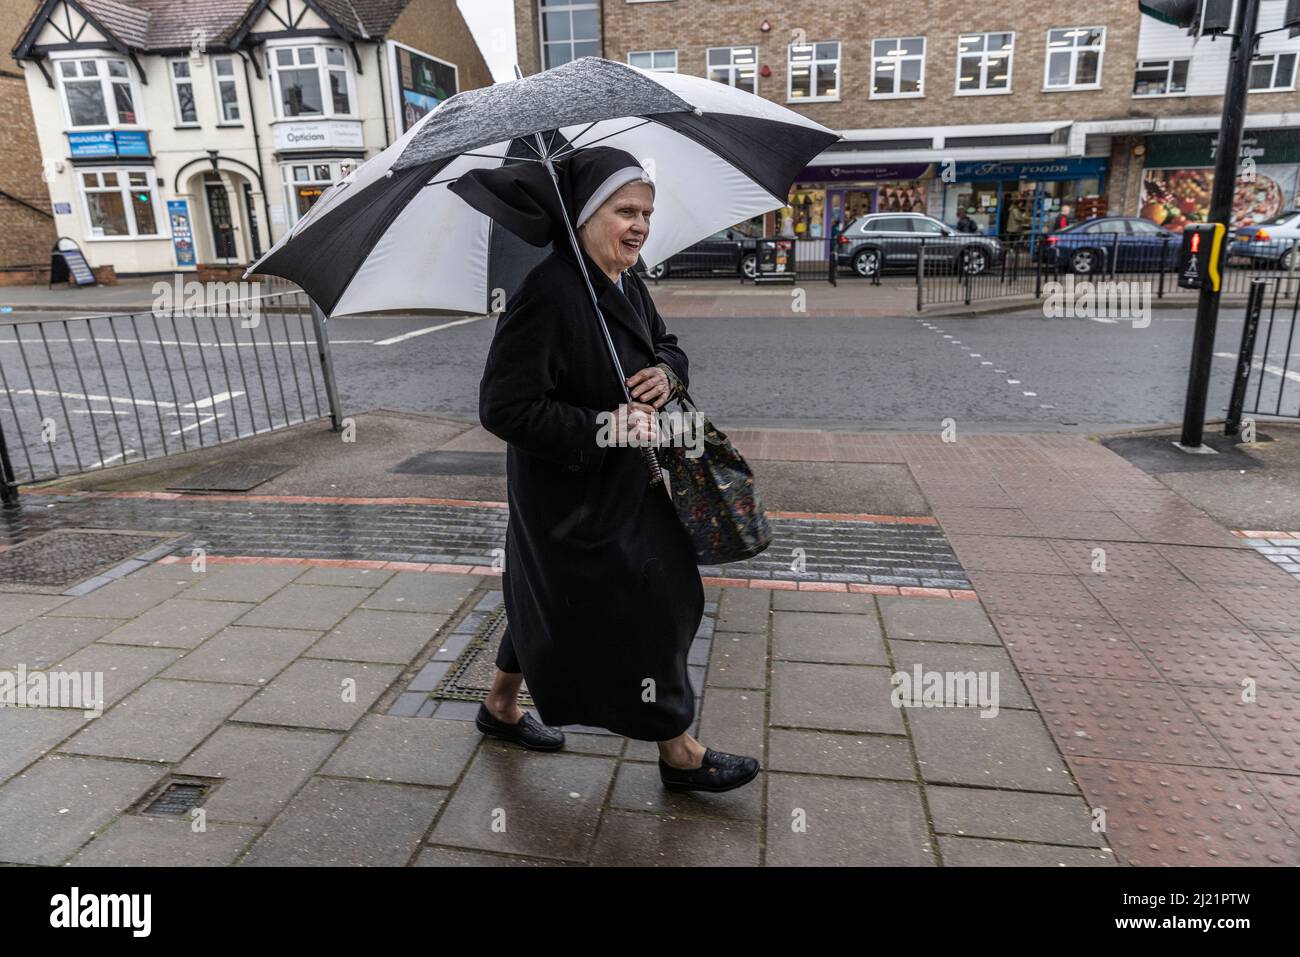 Catholic Nun on the Run between rain showers, a Bushey, Hertfordshire, Inghilterra, Regno Unito Foto Stock